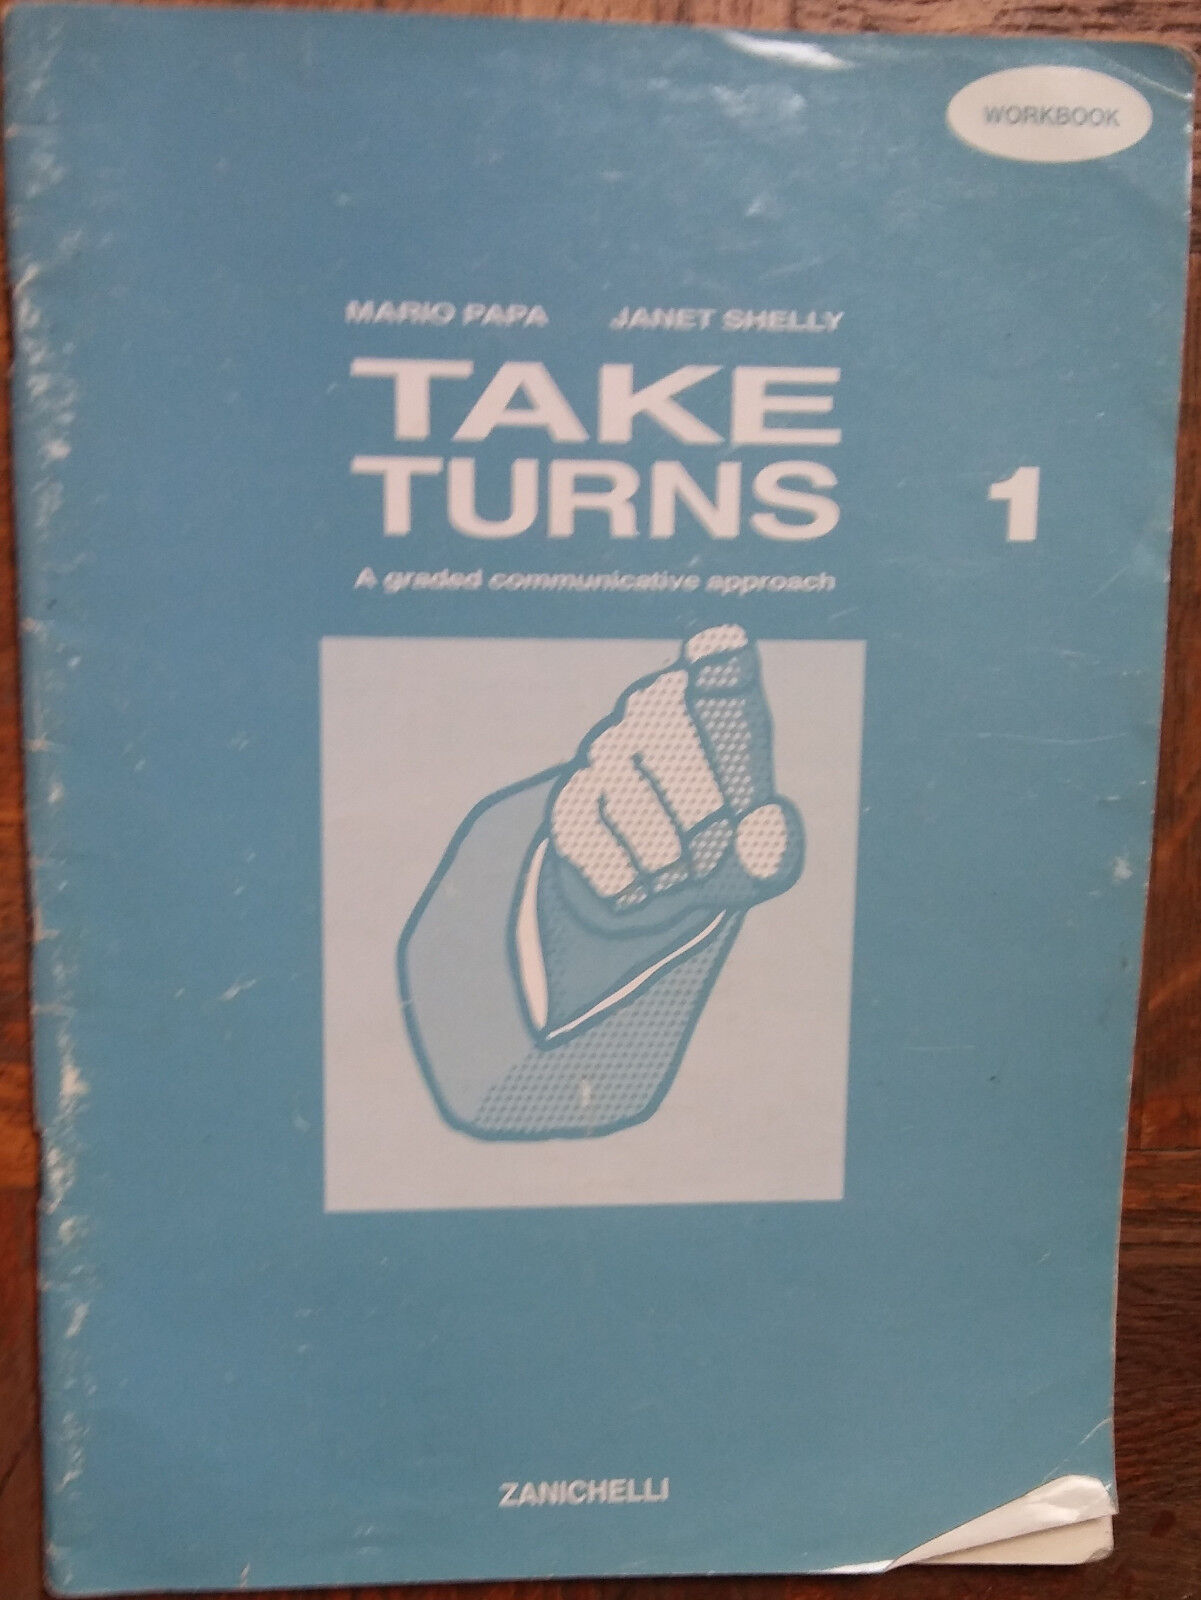 Take turns Vol. 1 - Mario Papa,Janet Shelley - Zanichelli - R